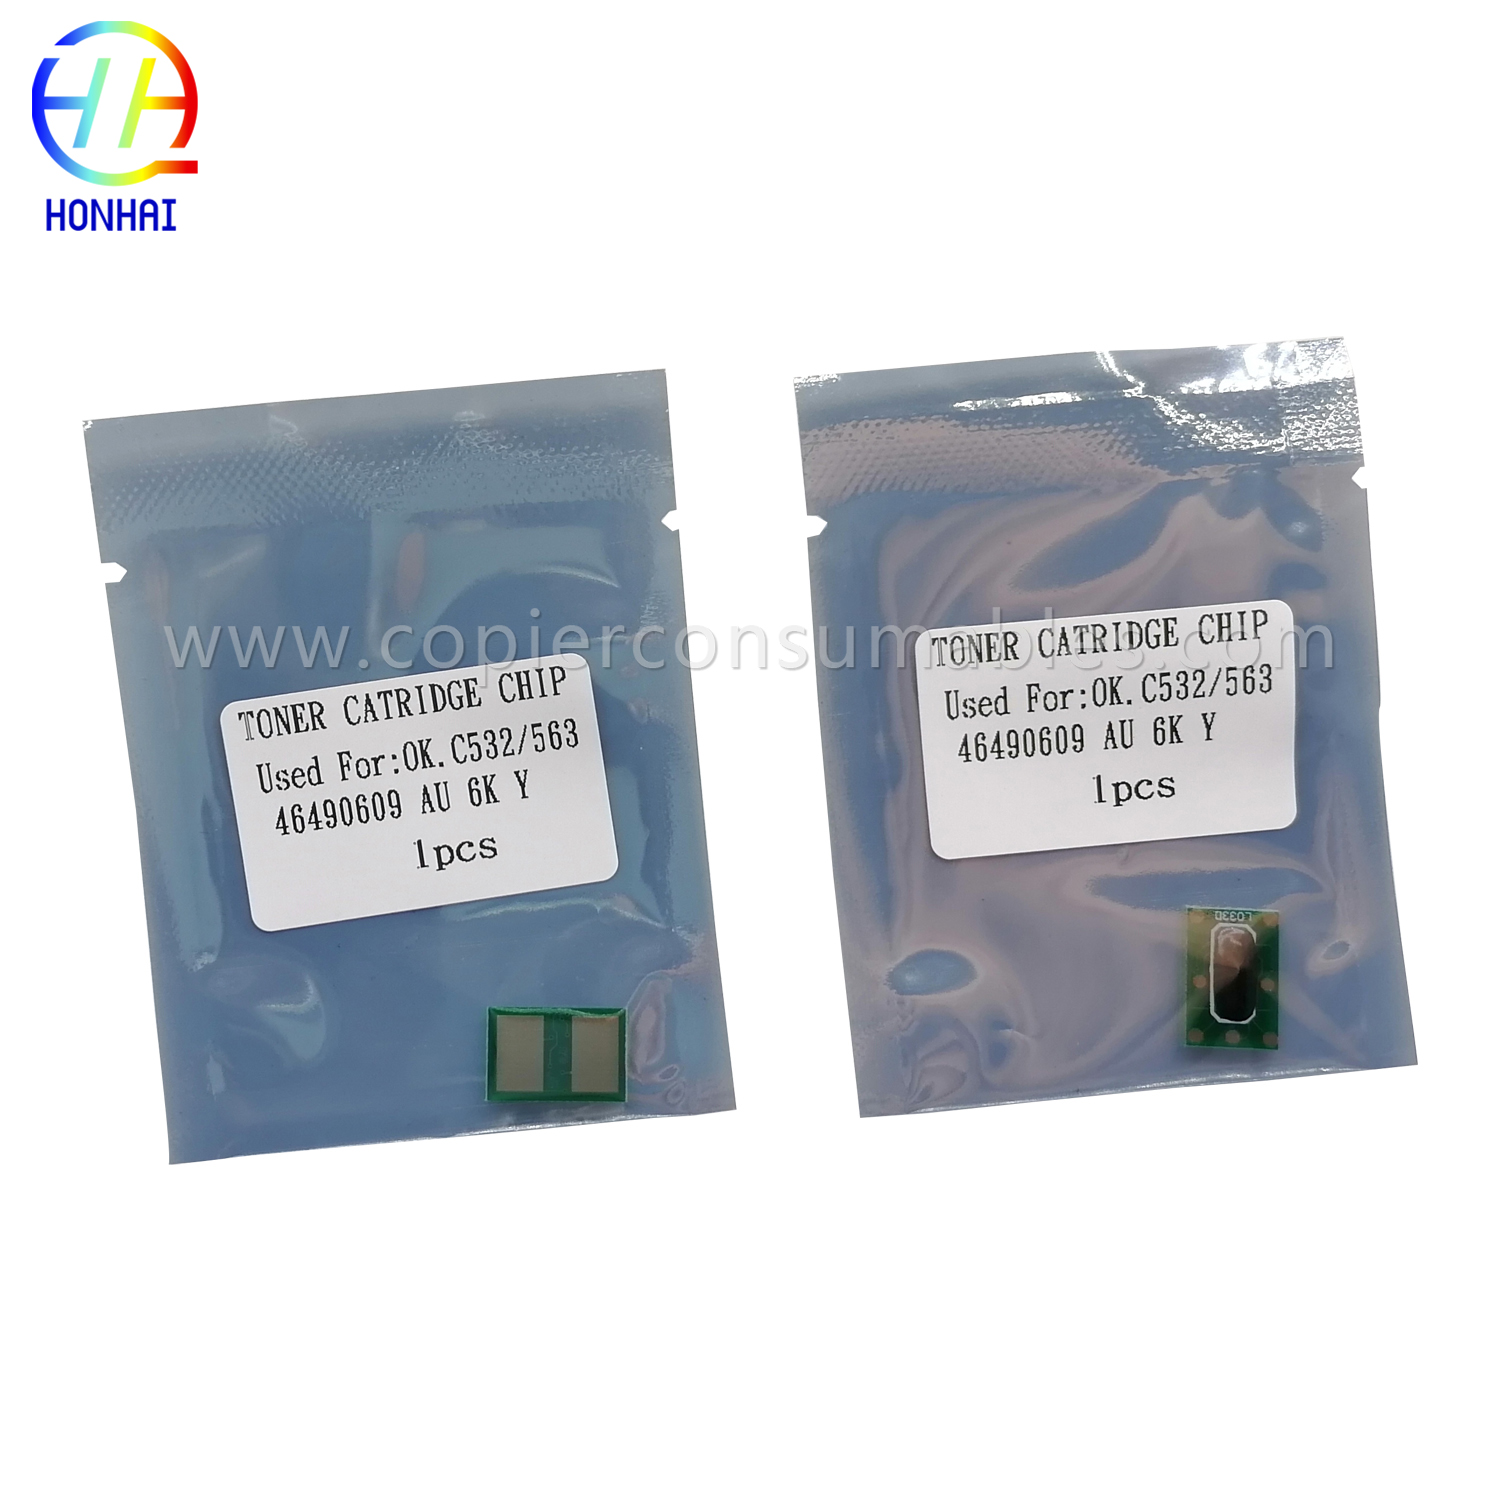 Toner Cartridge Chip for OKI C532DN MC573DN 6K 46490610 46490611 46490609 46490612(4) 拷贝